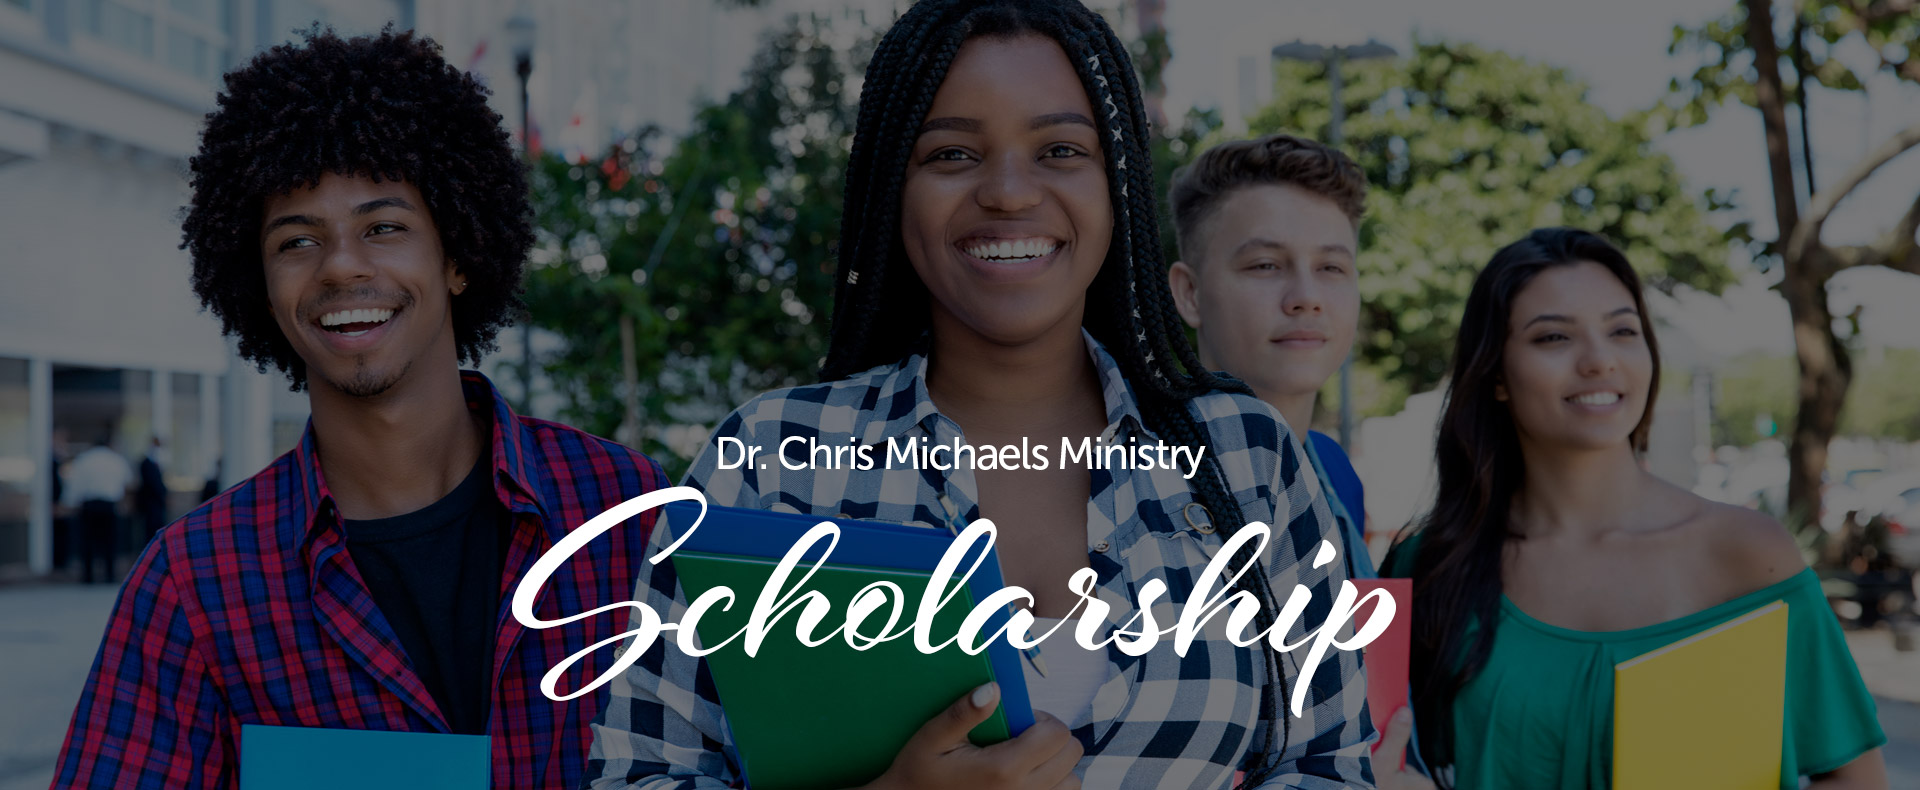 Dr Chris Michaels Scholarship